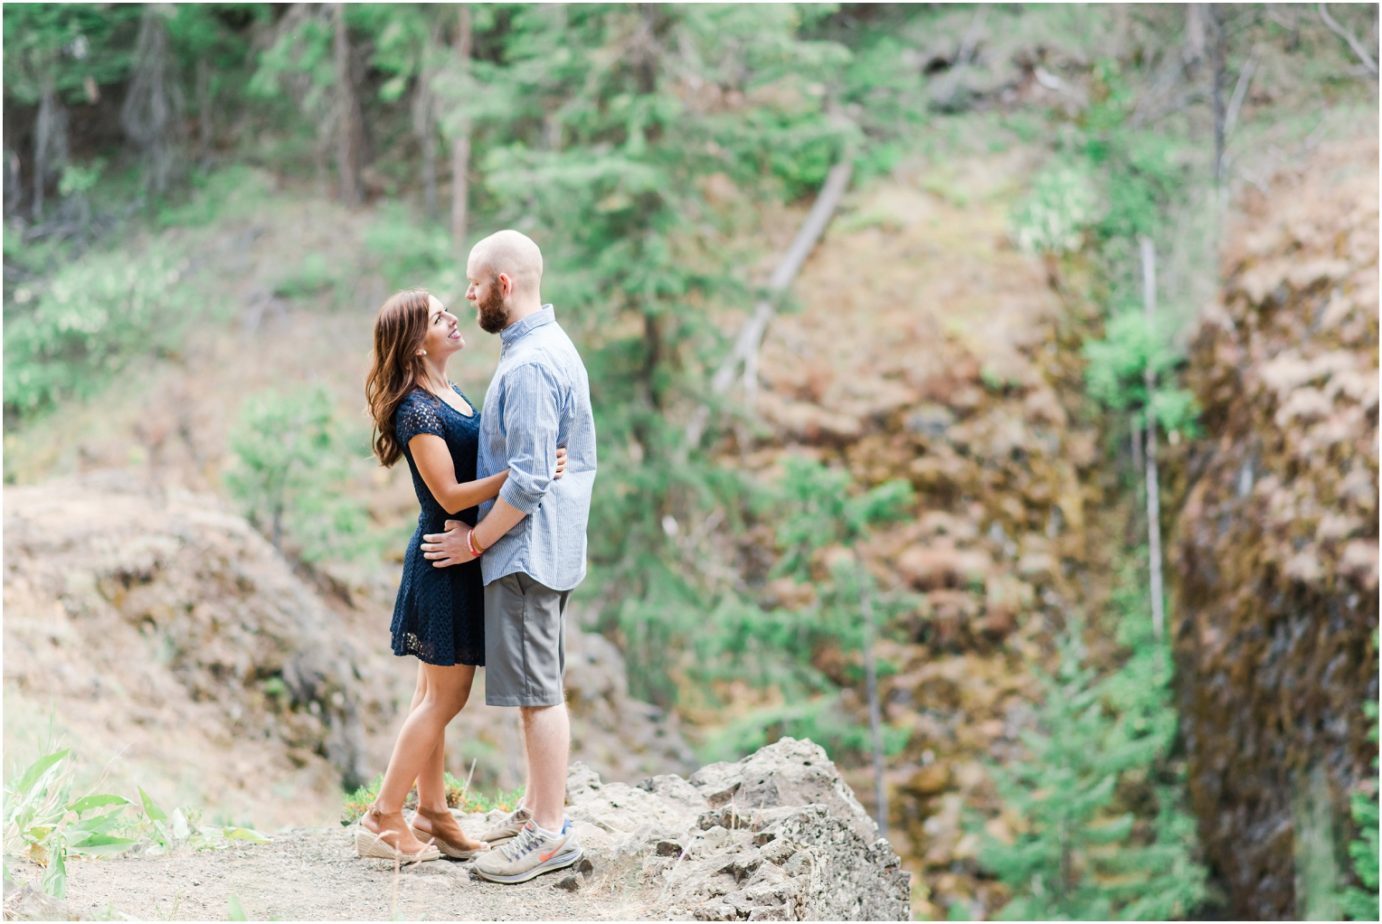 Boulder Cave Engagement Session Naches WA Couple on a cliff